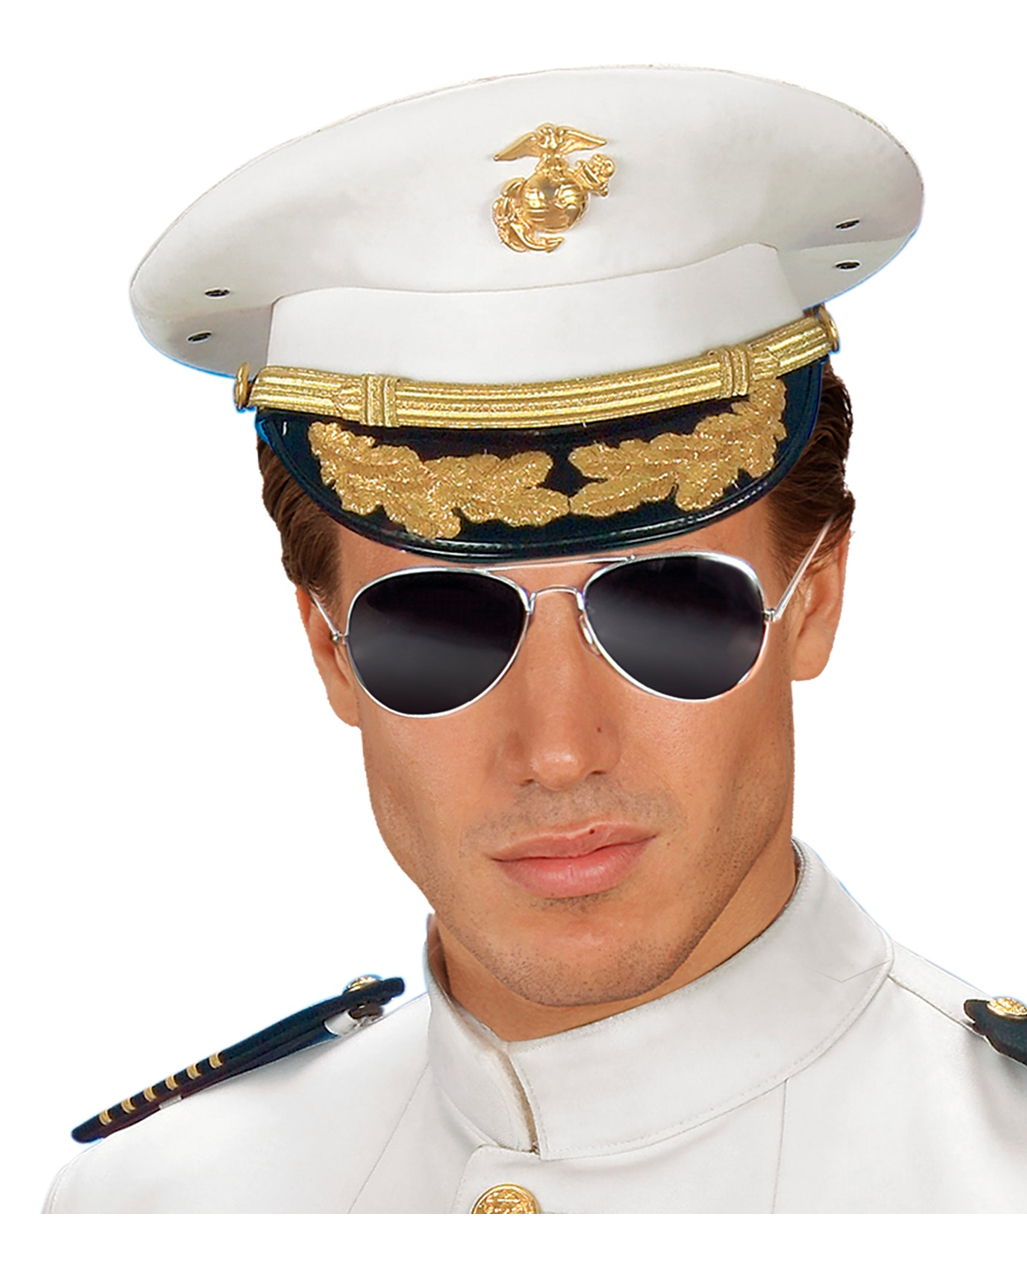 Police / Aviator Sunglasses as accessory a costume